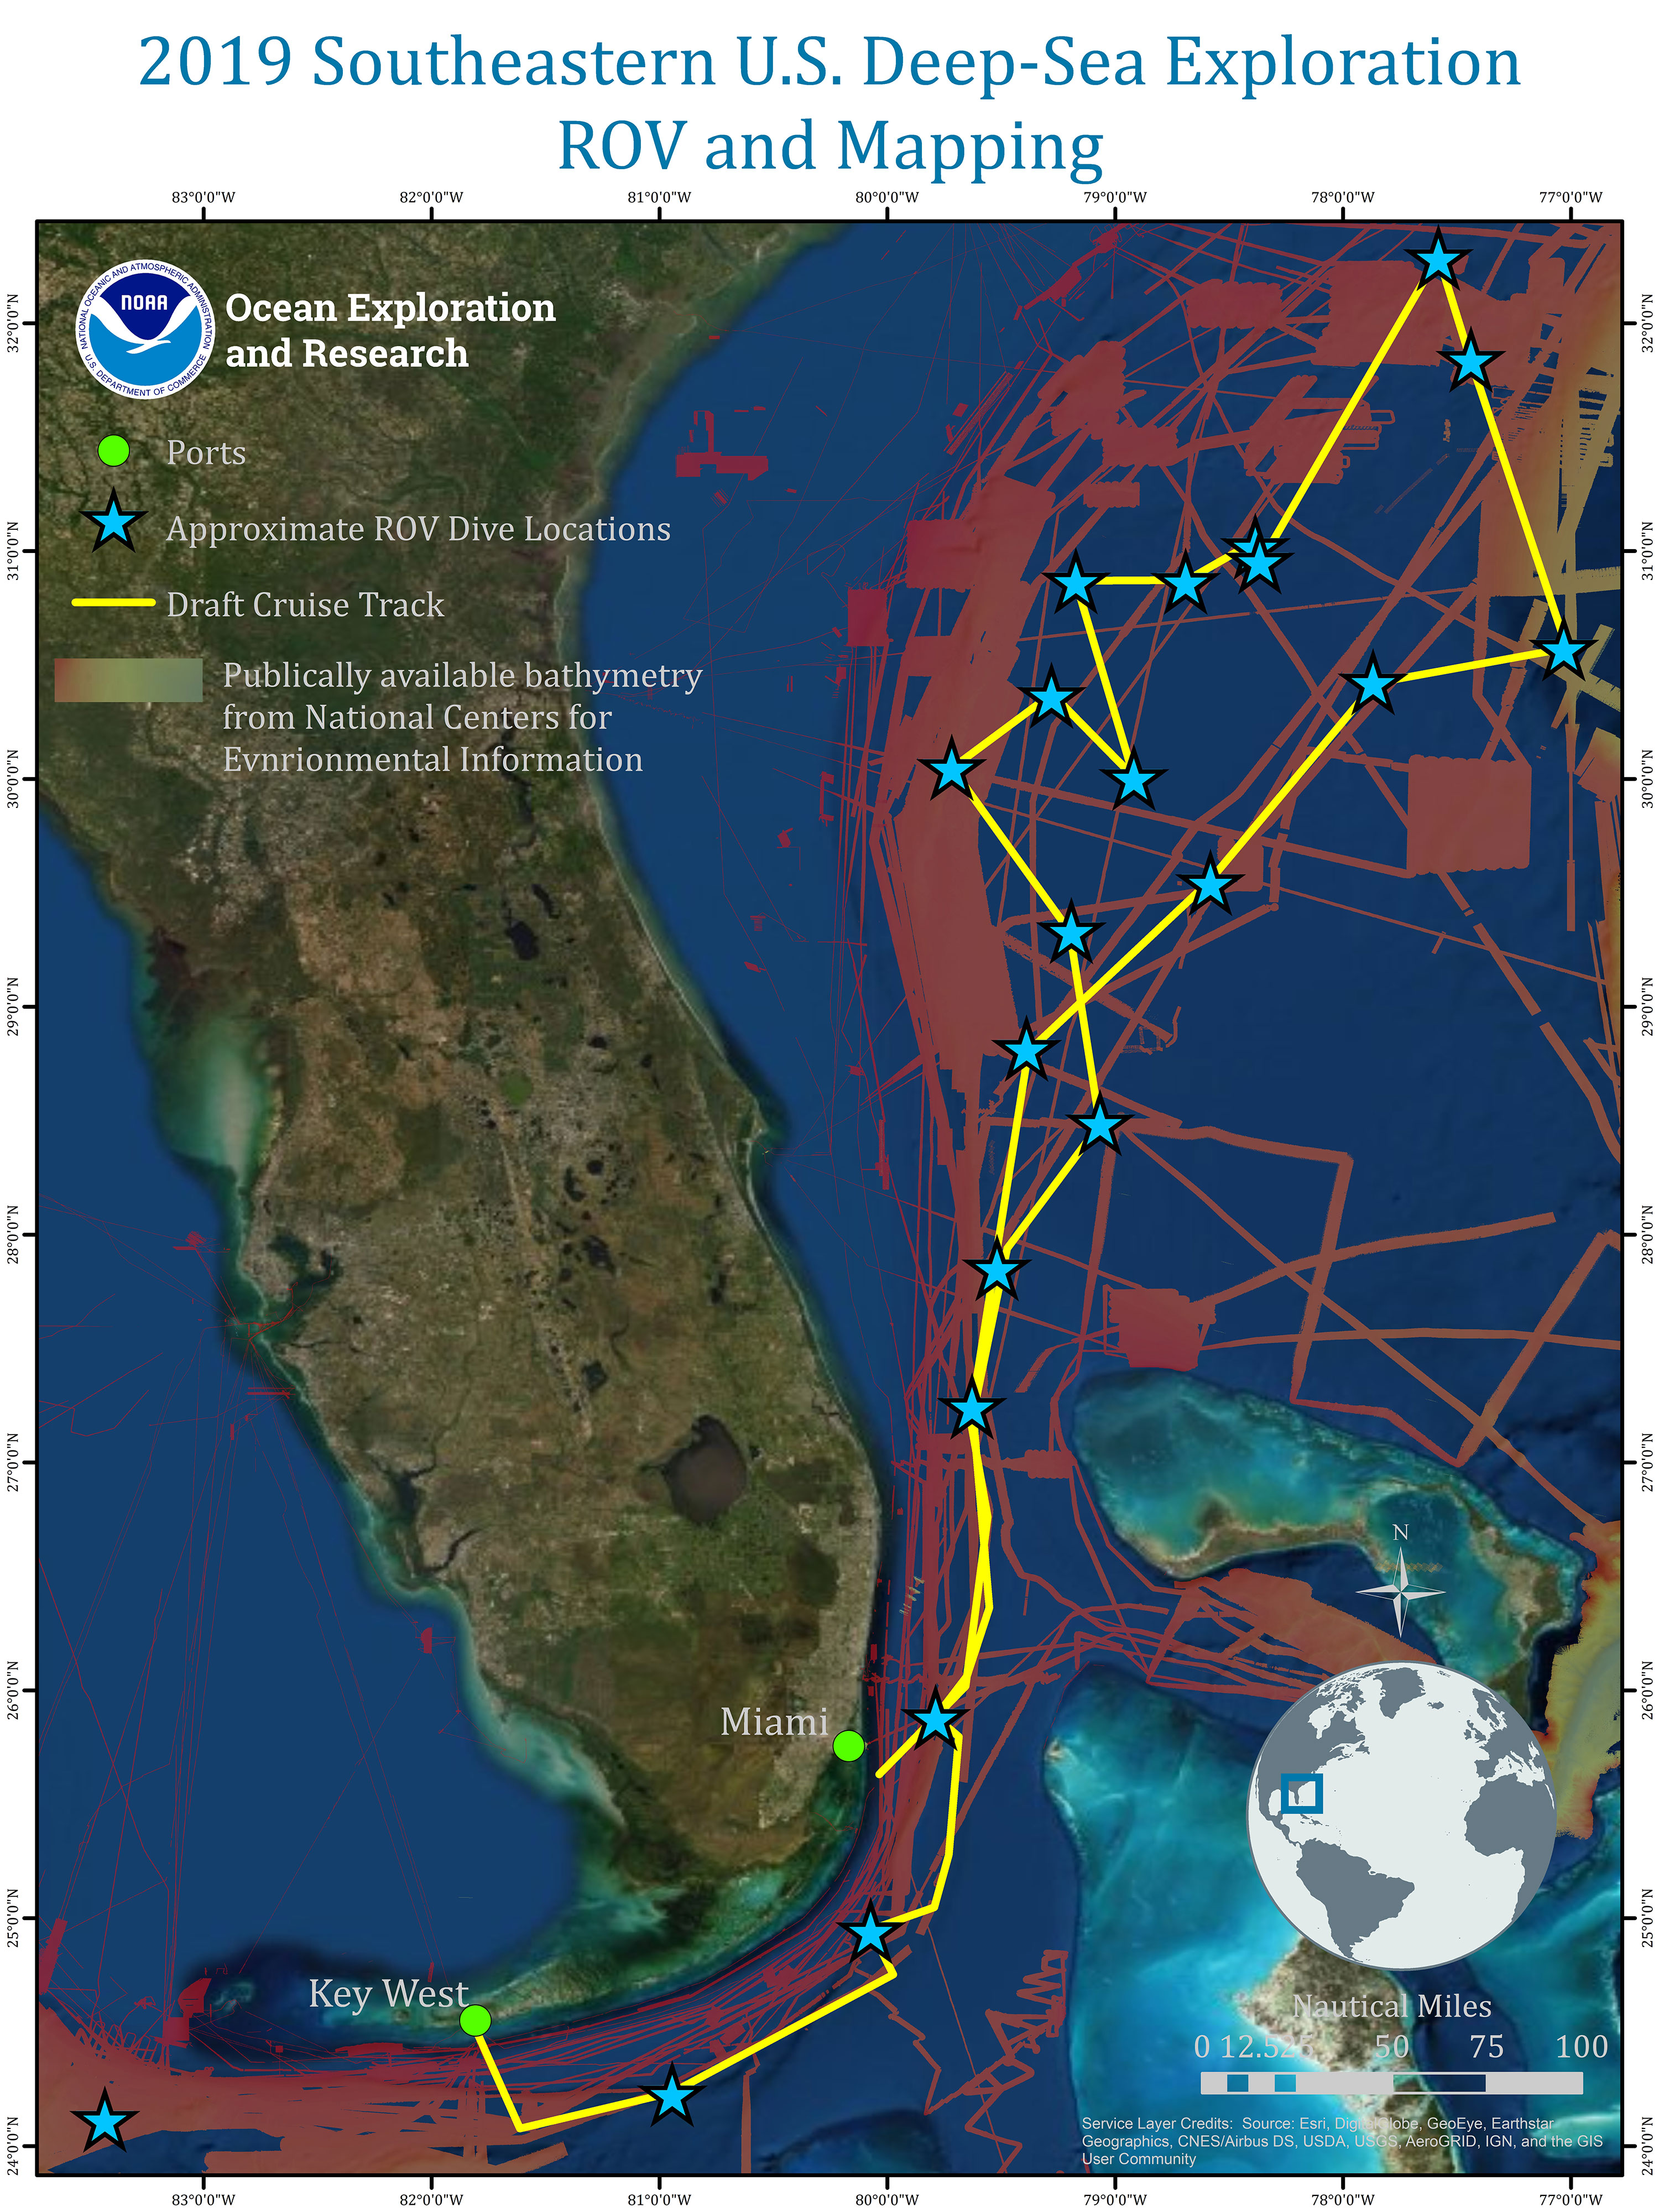 Mission Plan 2019 Southeastern U.S. Deepsea Exploration